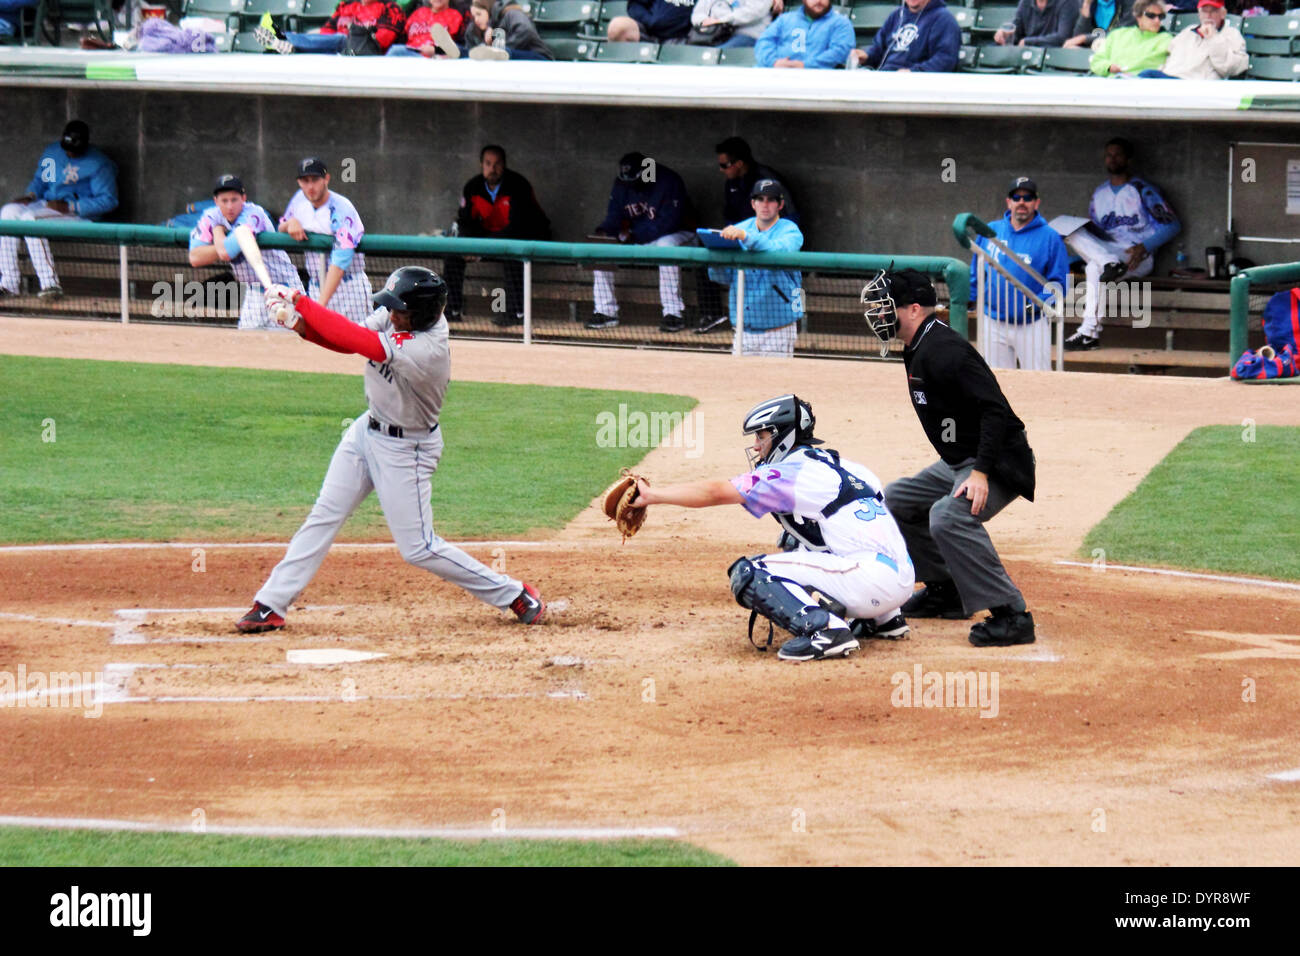 A baseball batter swings at a pitch. Stock Photo